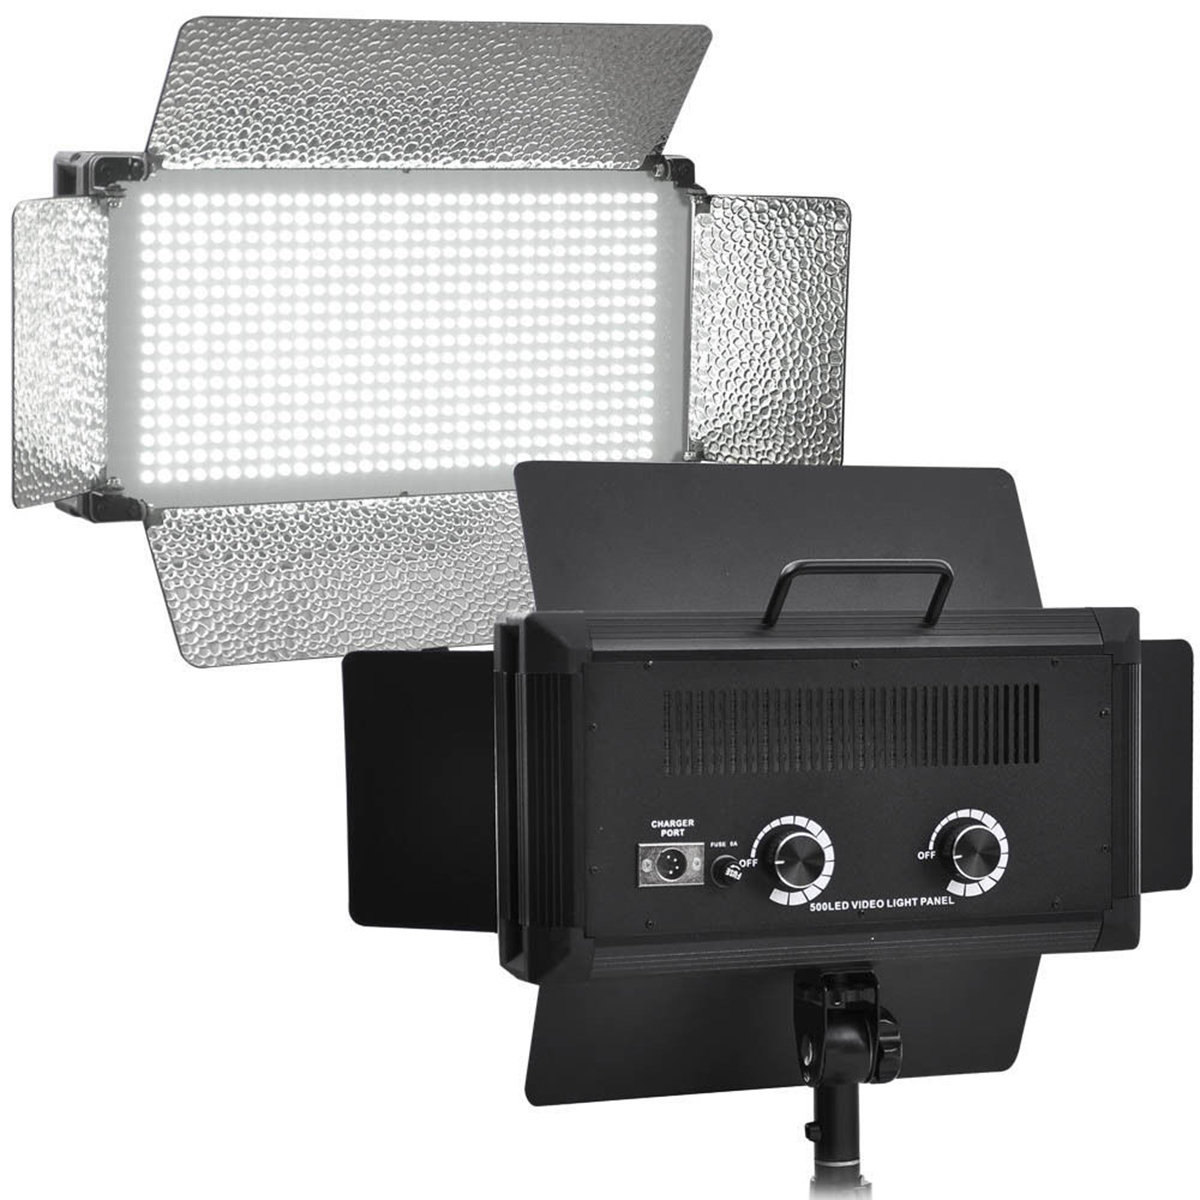 330-LED-Light-Panel-Kit-Photography-Video-Studio-L-ighting-Dimmer-Mount-Photo-1155687